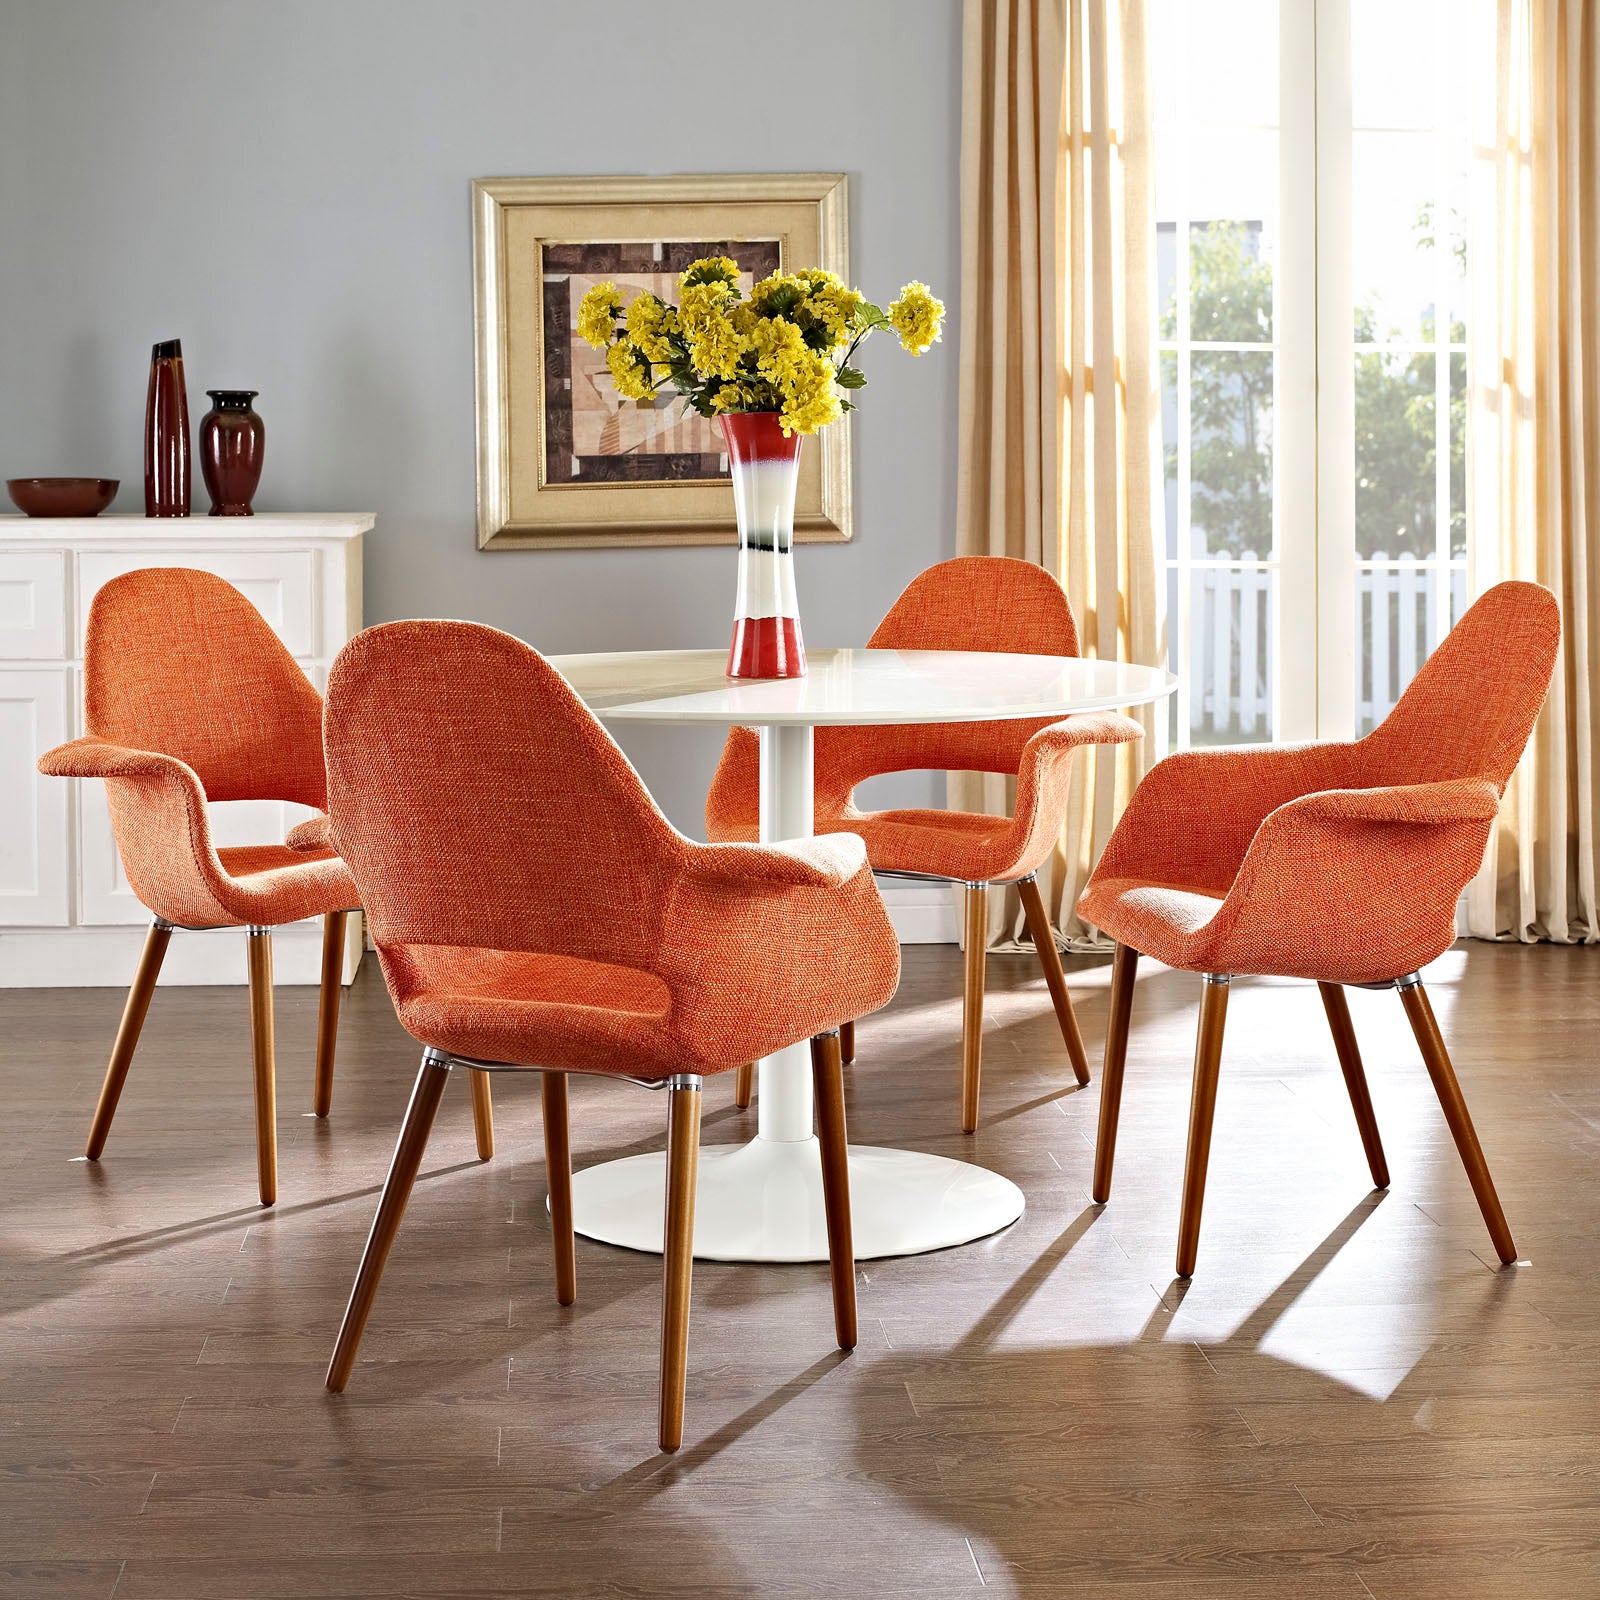 Aegis Dining Armchair Set of 4 - East Shore Modern Home Furnishings